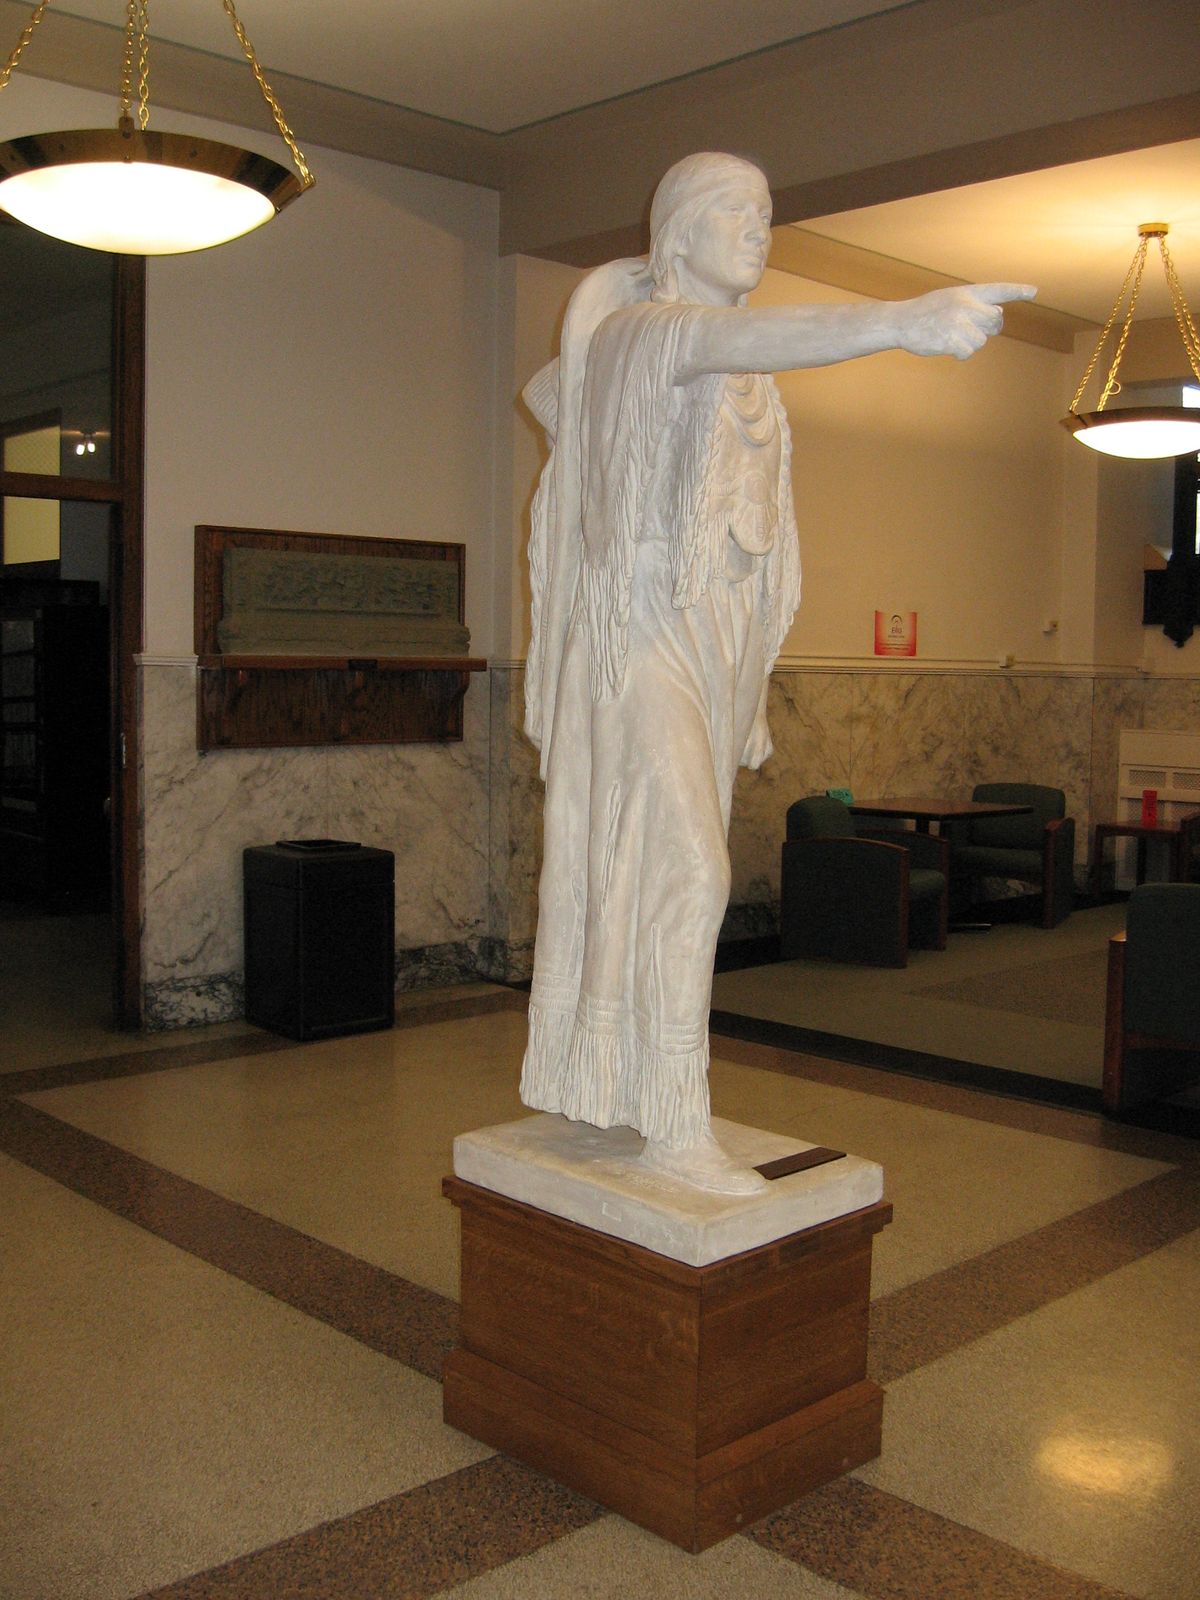 The Eastern Washington University’s plaster statue of Sacajawea before it was encased in Plexiglas.